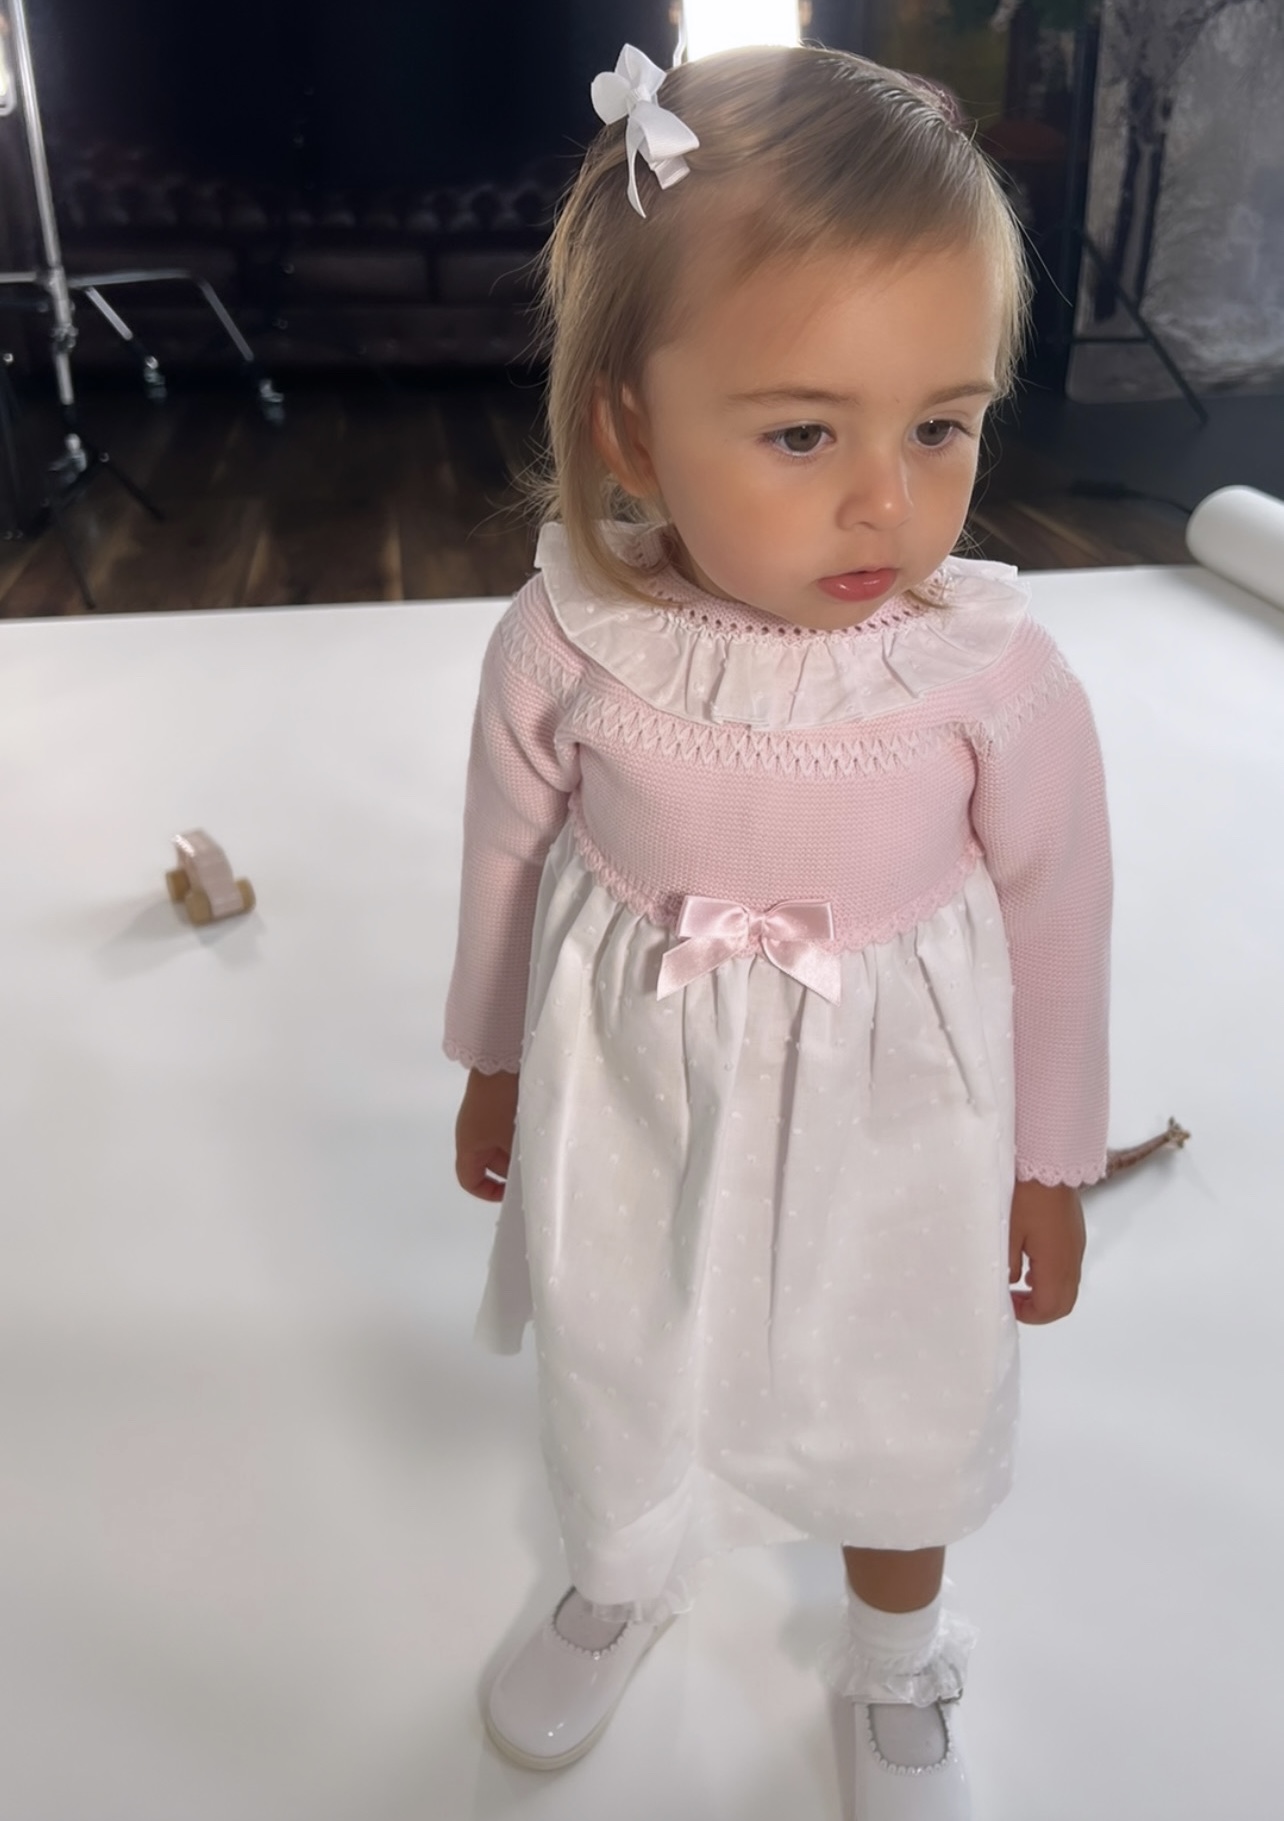 Granlei Little Cubs Exclusive Pink & White Dot Dress